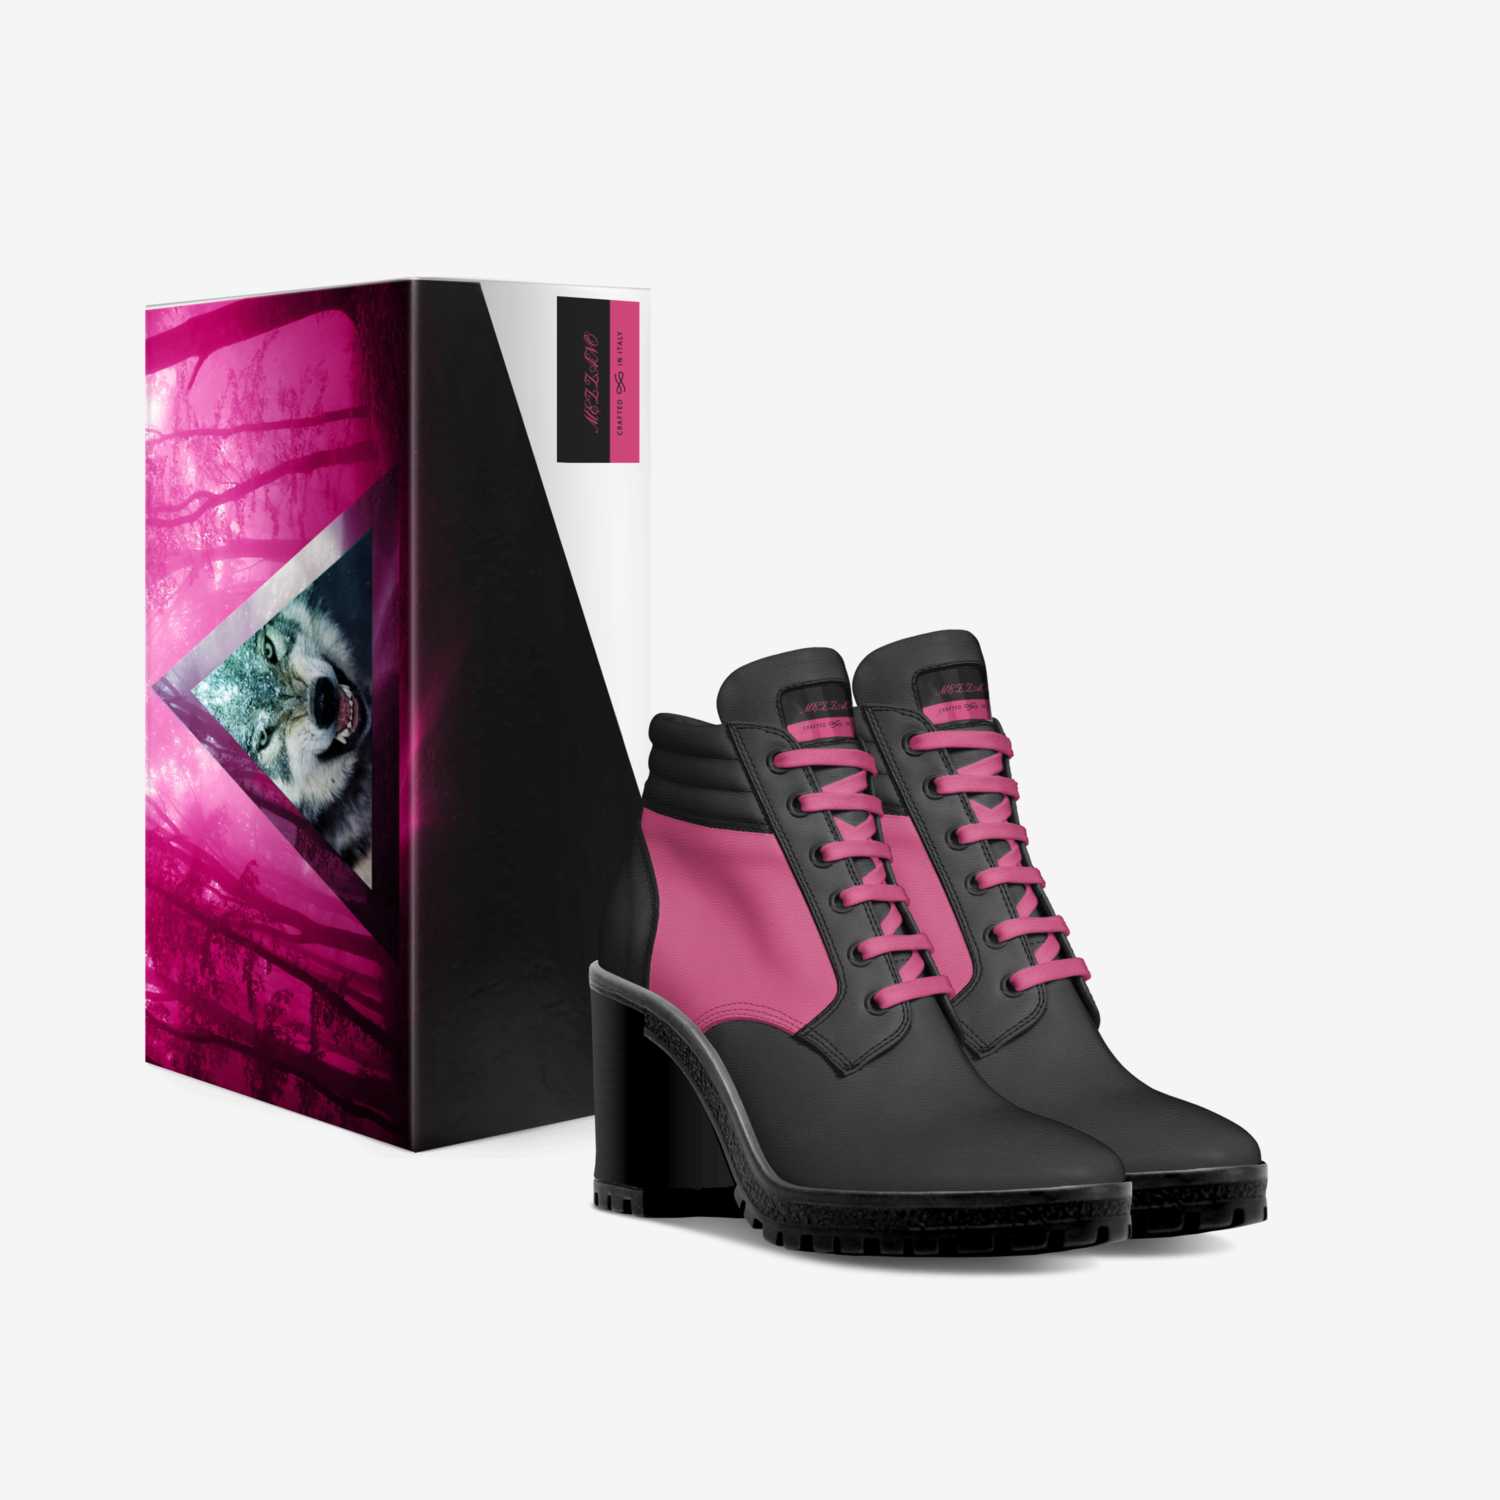 MEZZANO ASHLEY  custom made in Italy shoes by Ray "lefty" Rhodes | Box view